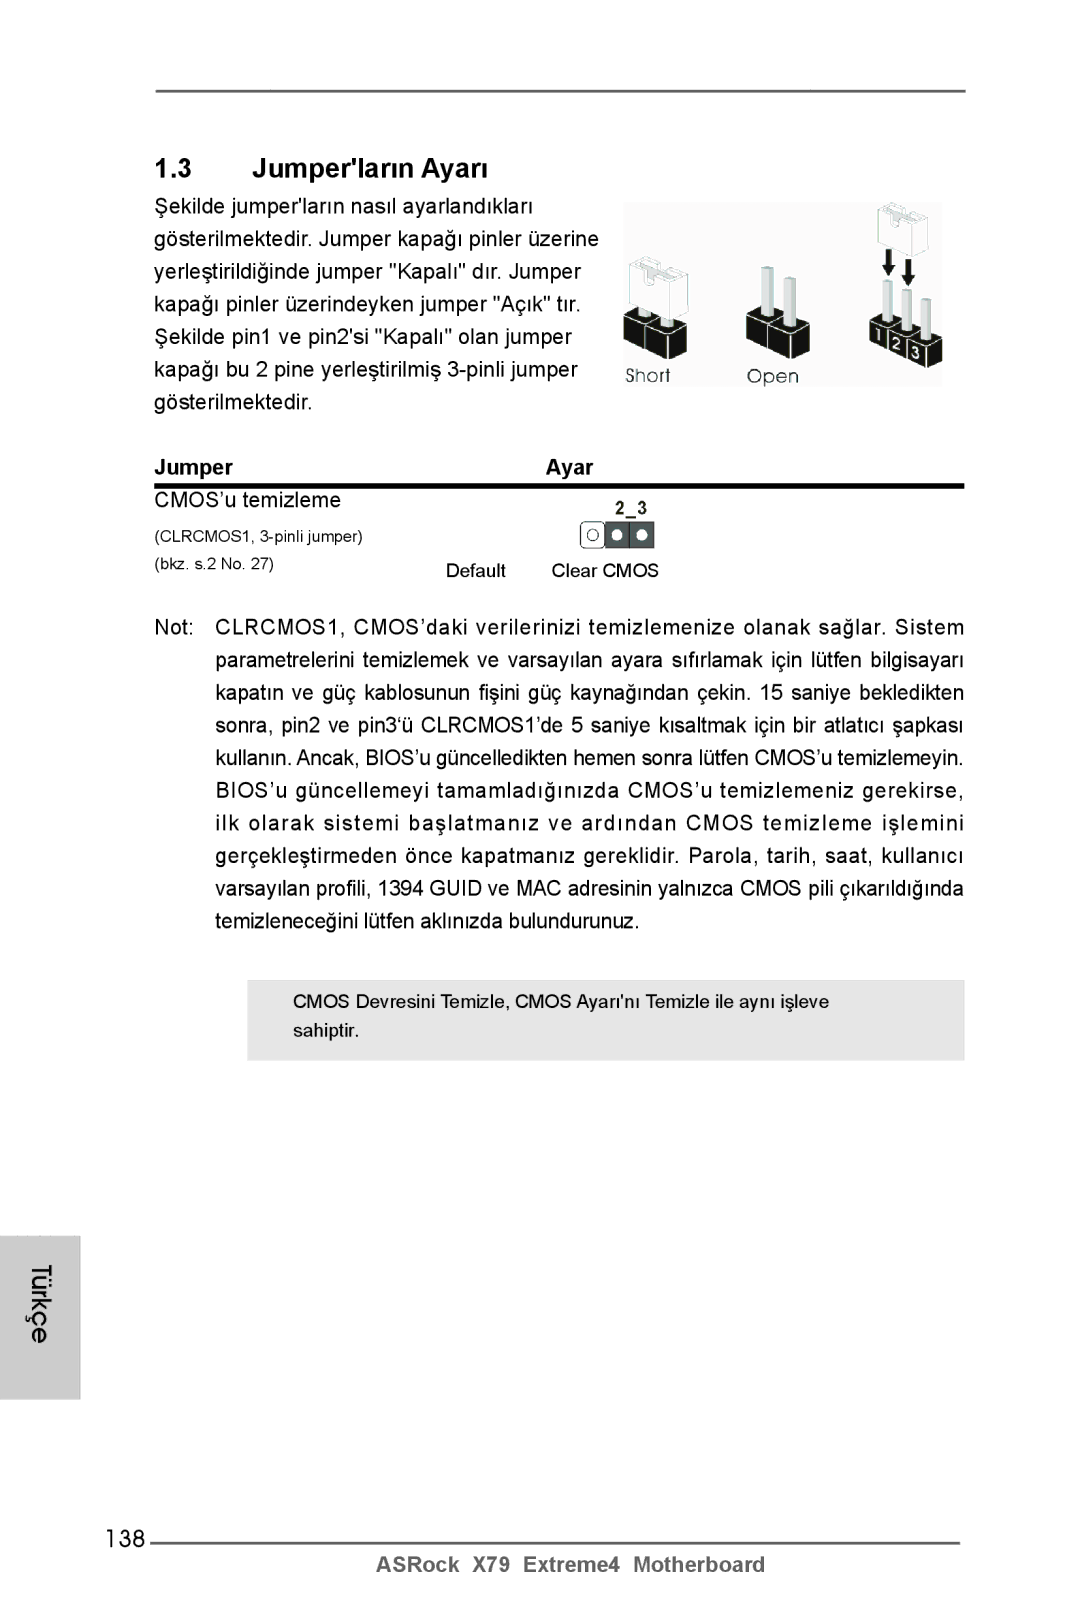 ASRock X79 Extreme4 manual 138, Jumper Ayar, CMOS’u temizleme 